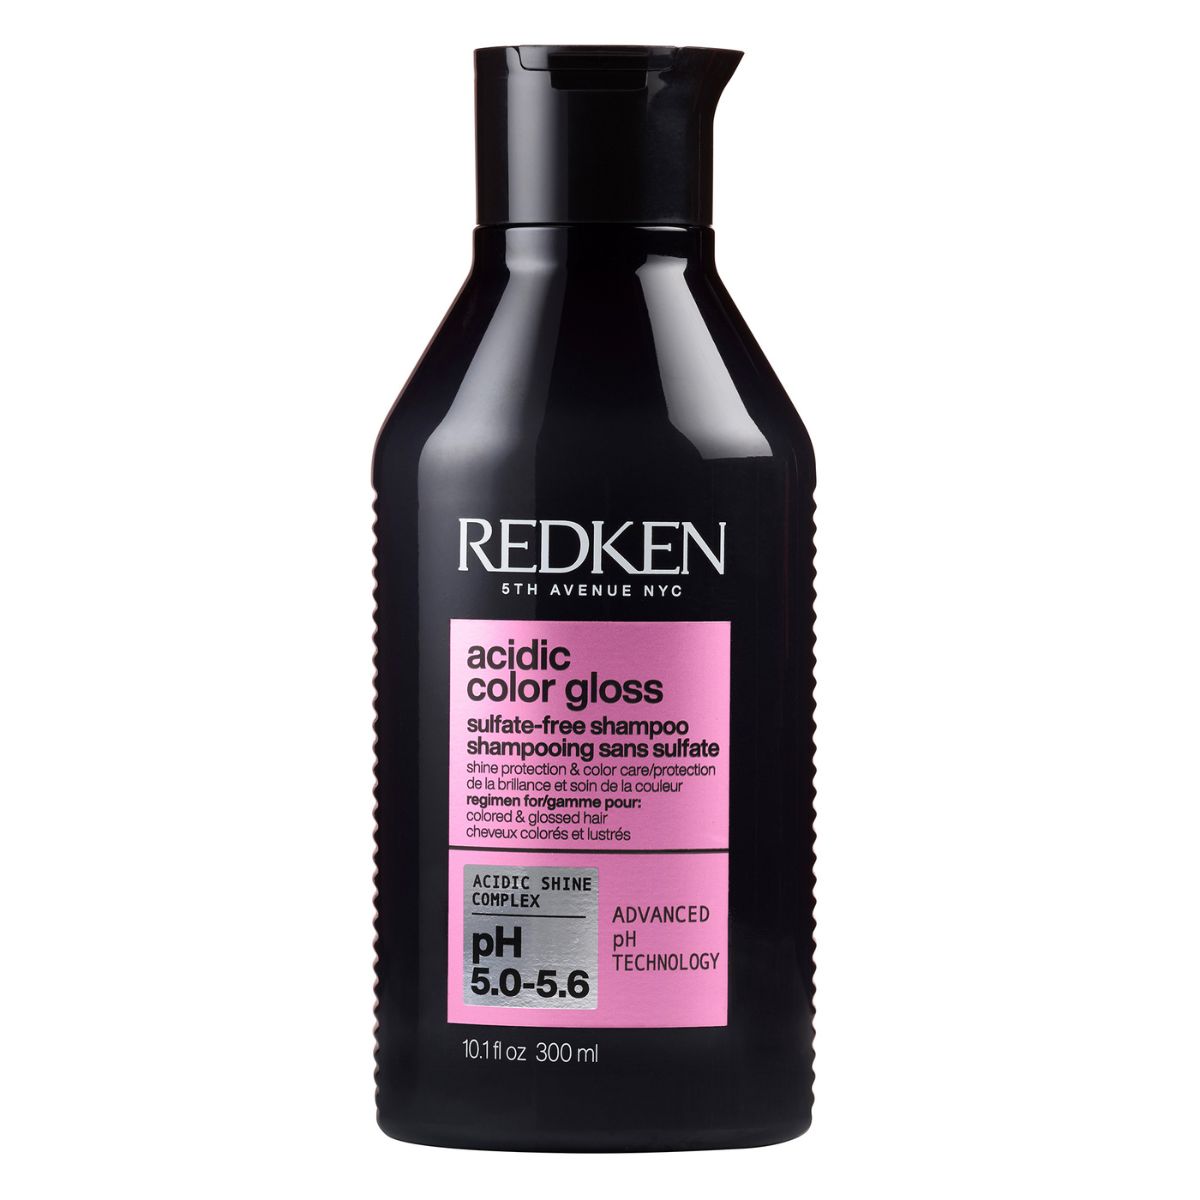 Redken Acidic Color Gloss Sulfate-free shampoo